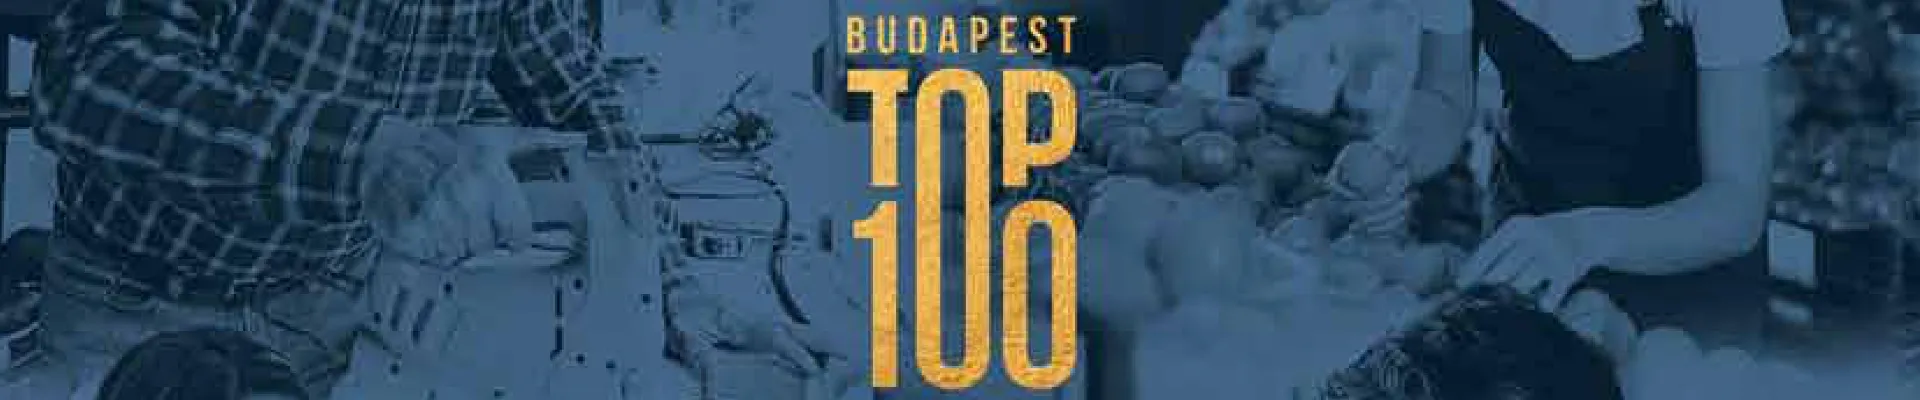 TOP 100 budapesti KKV